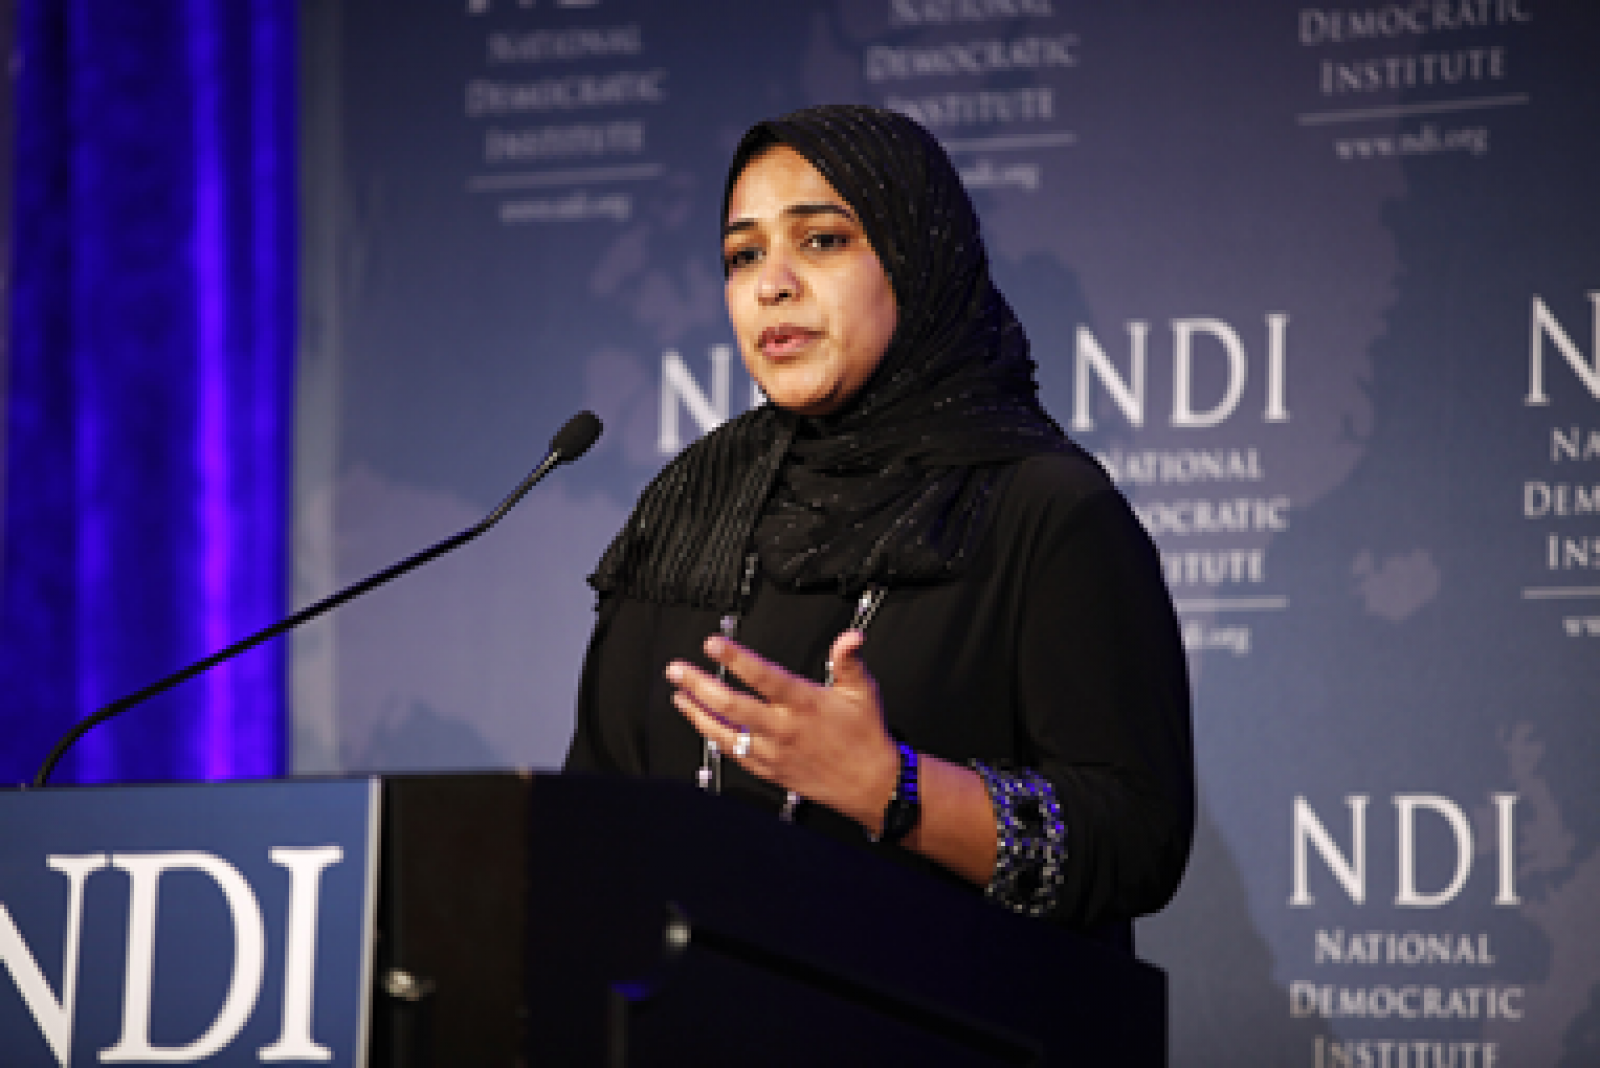 NDI Staffer Seeks to Connect Somali Women in Parliament, Civil Society